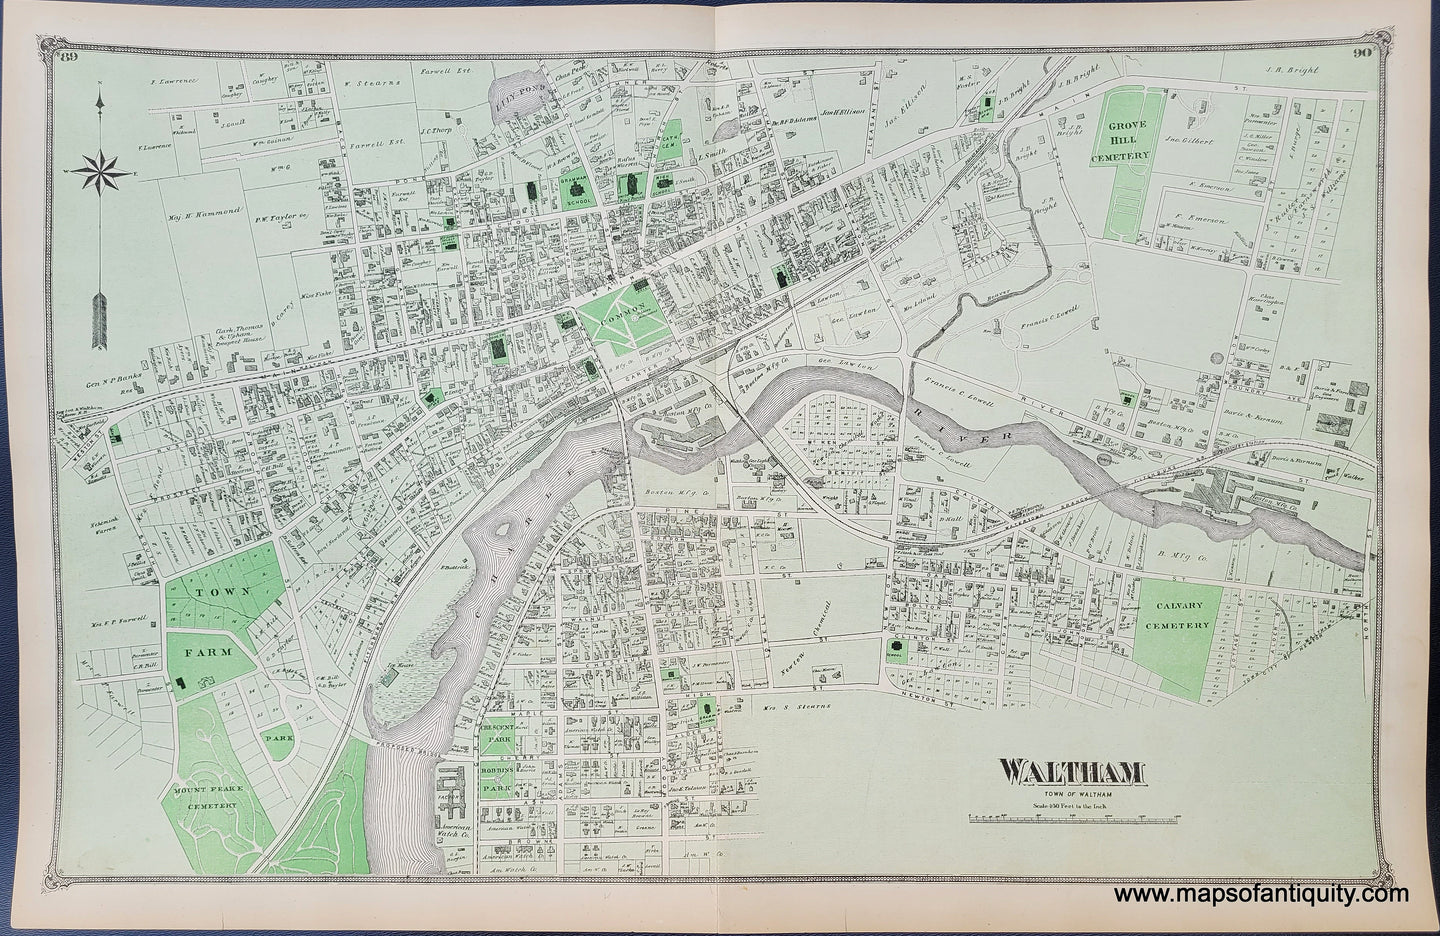 Antique-Map-Waltham-Massachusetts-Maps-of-Antiquity